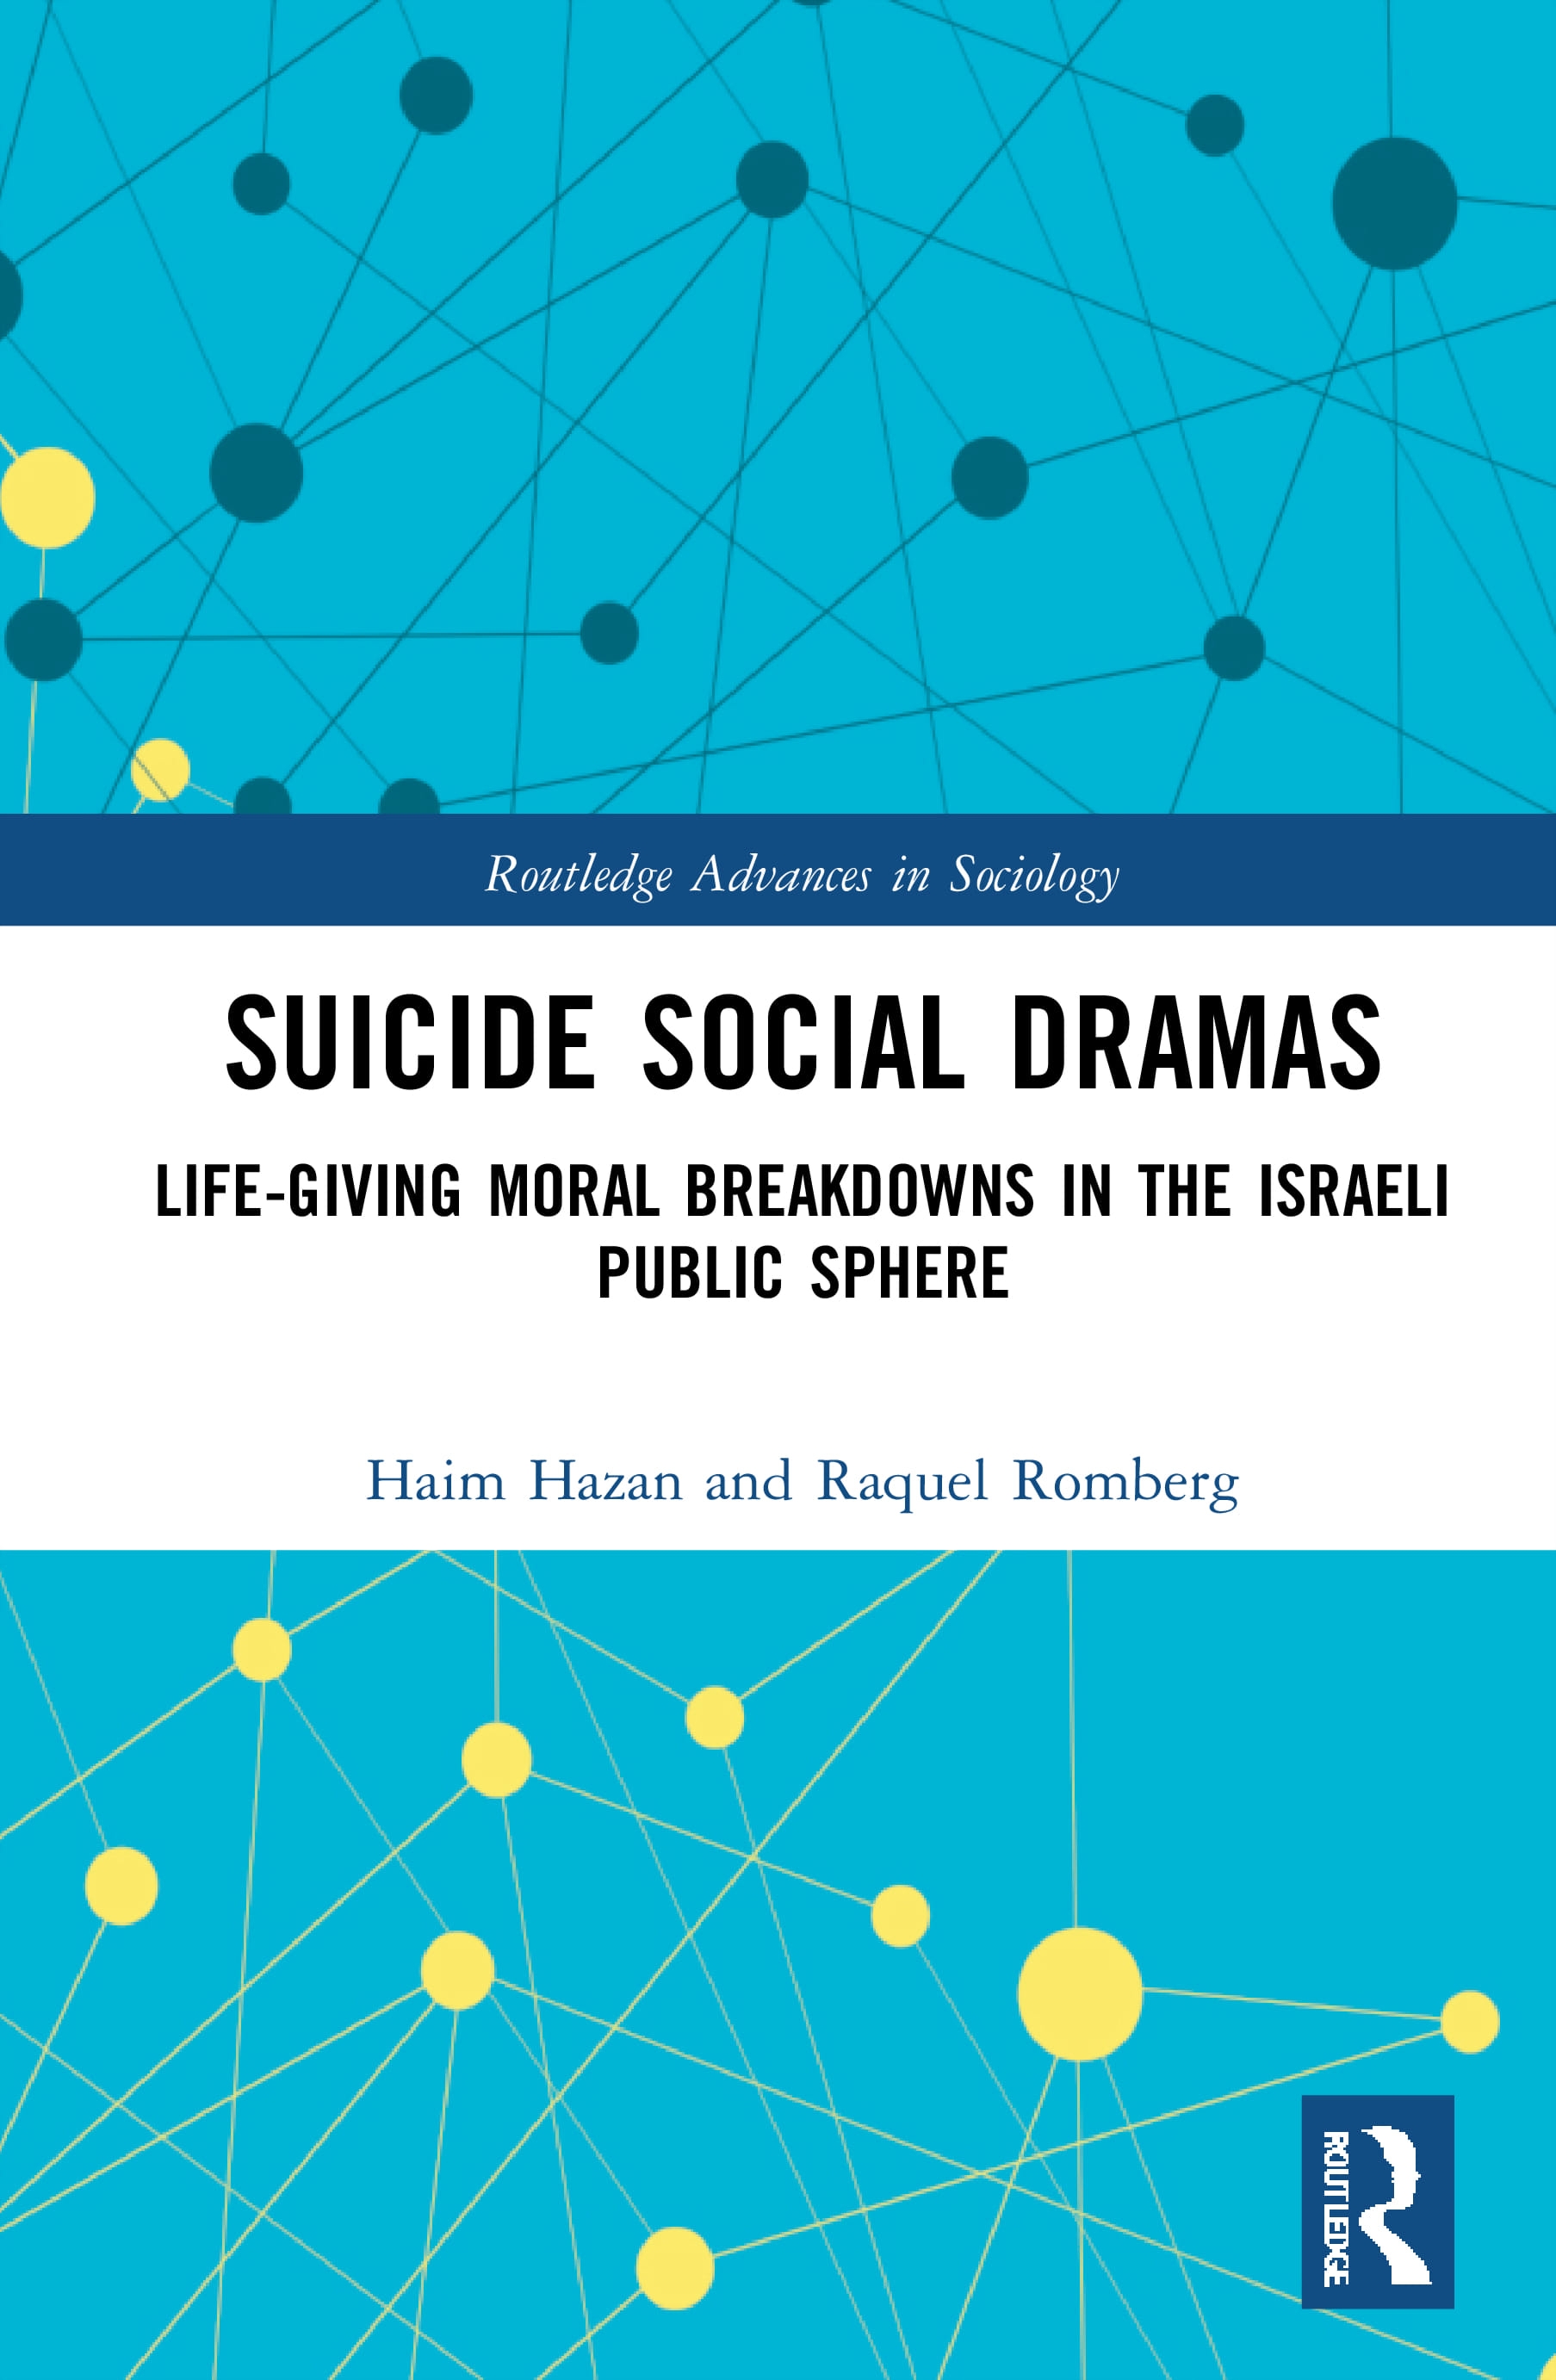 Suicide Social Dramas: Moral Breakdowns in the Israeli Public Sphere